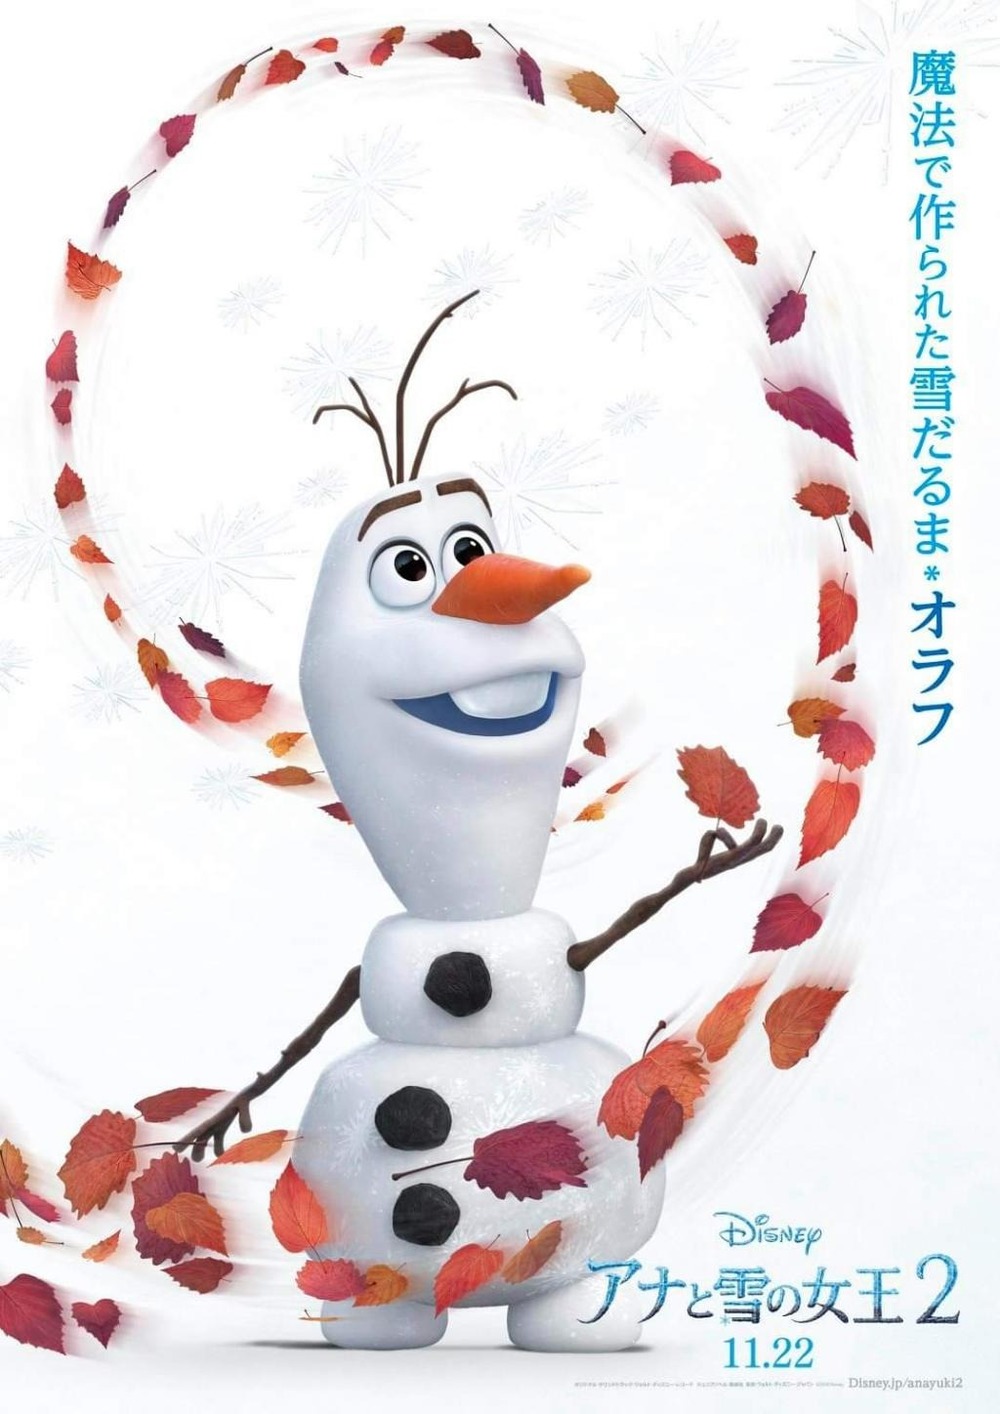 Frozen 2 DVD Release Date | Redbox, Netflix, iTunes, Amazon